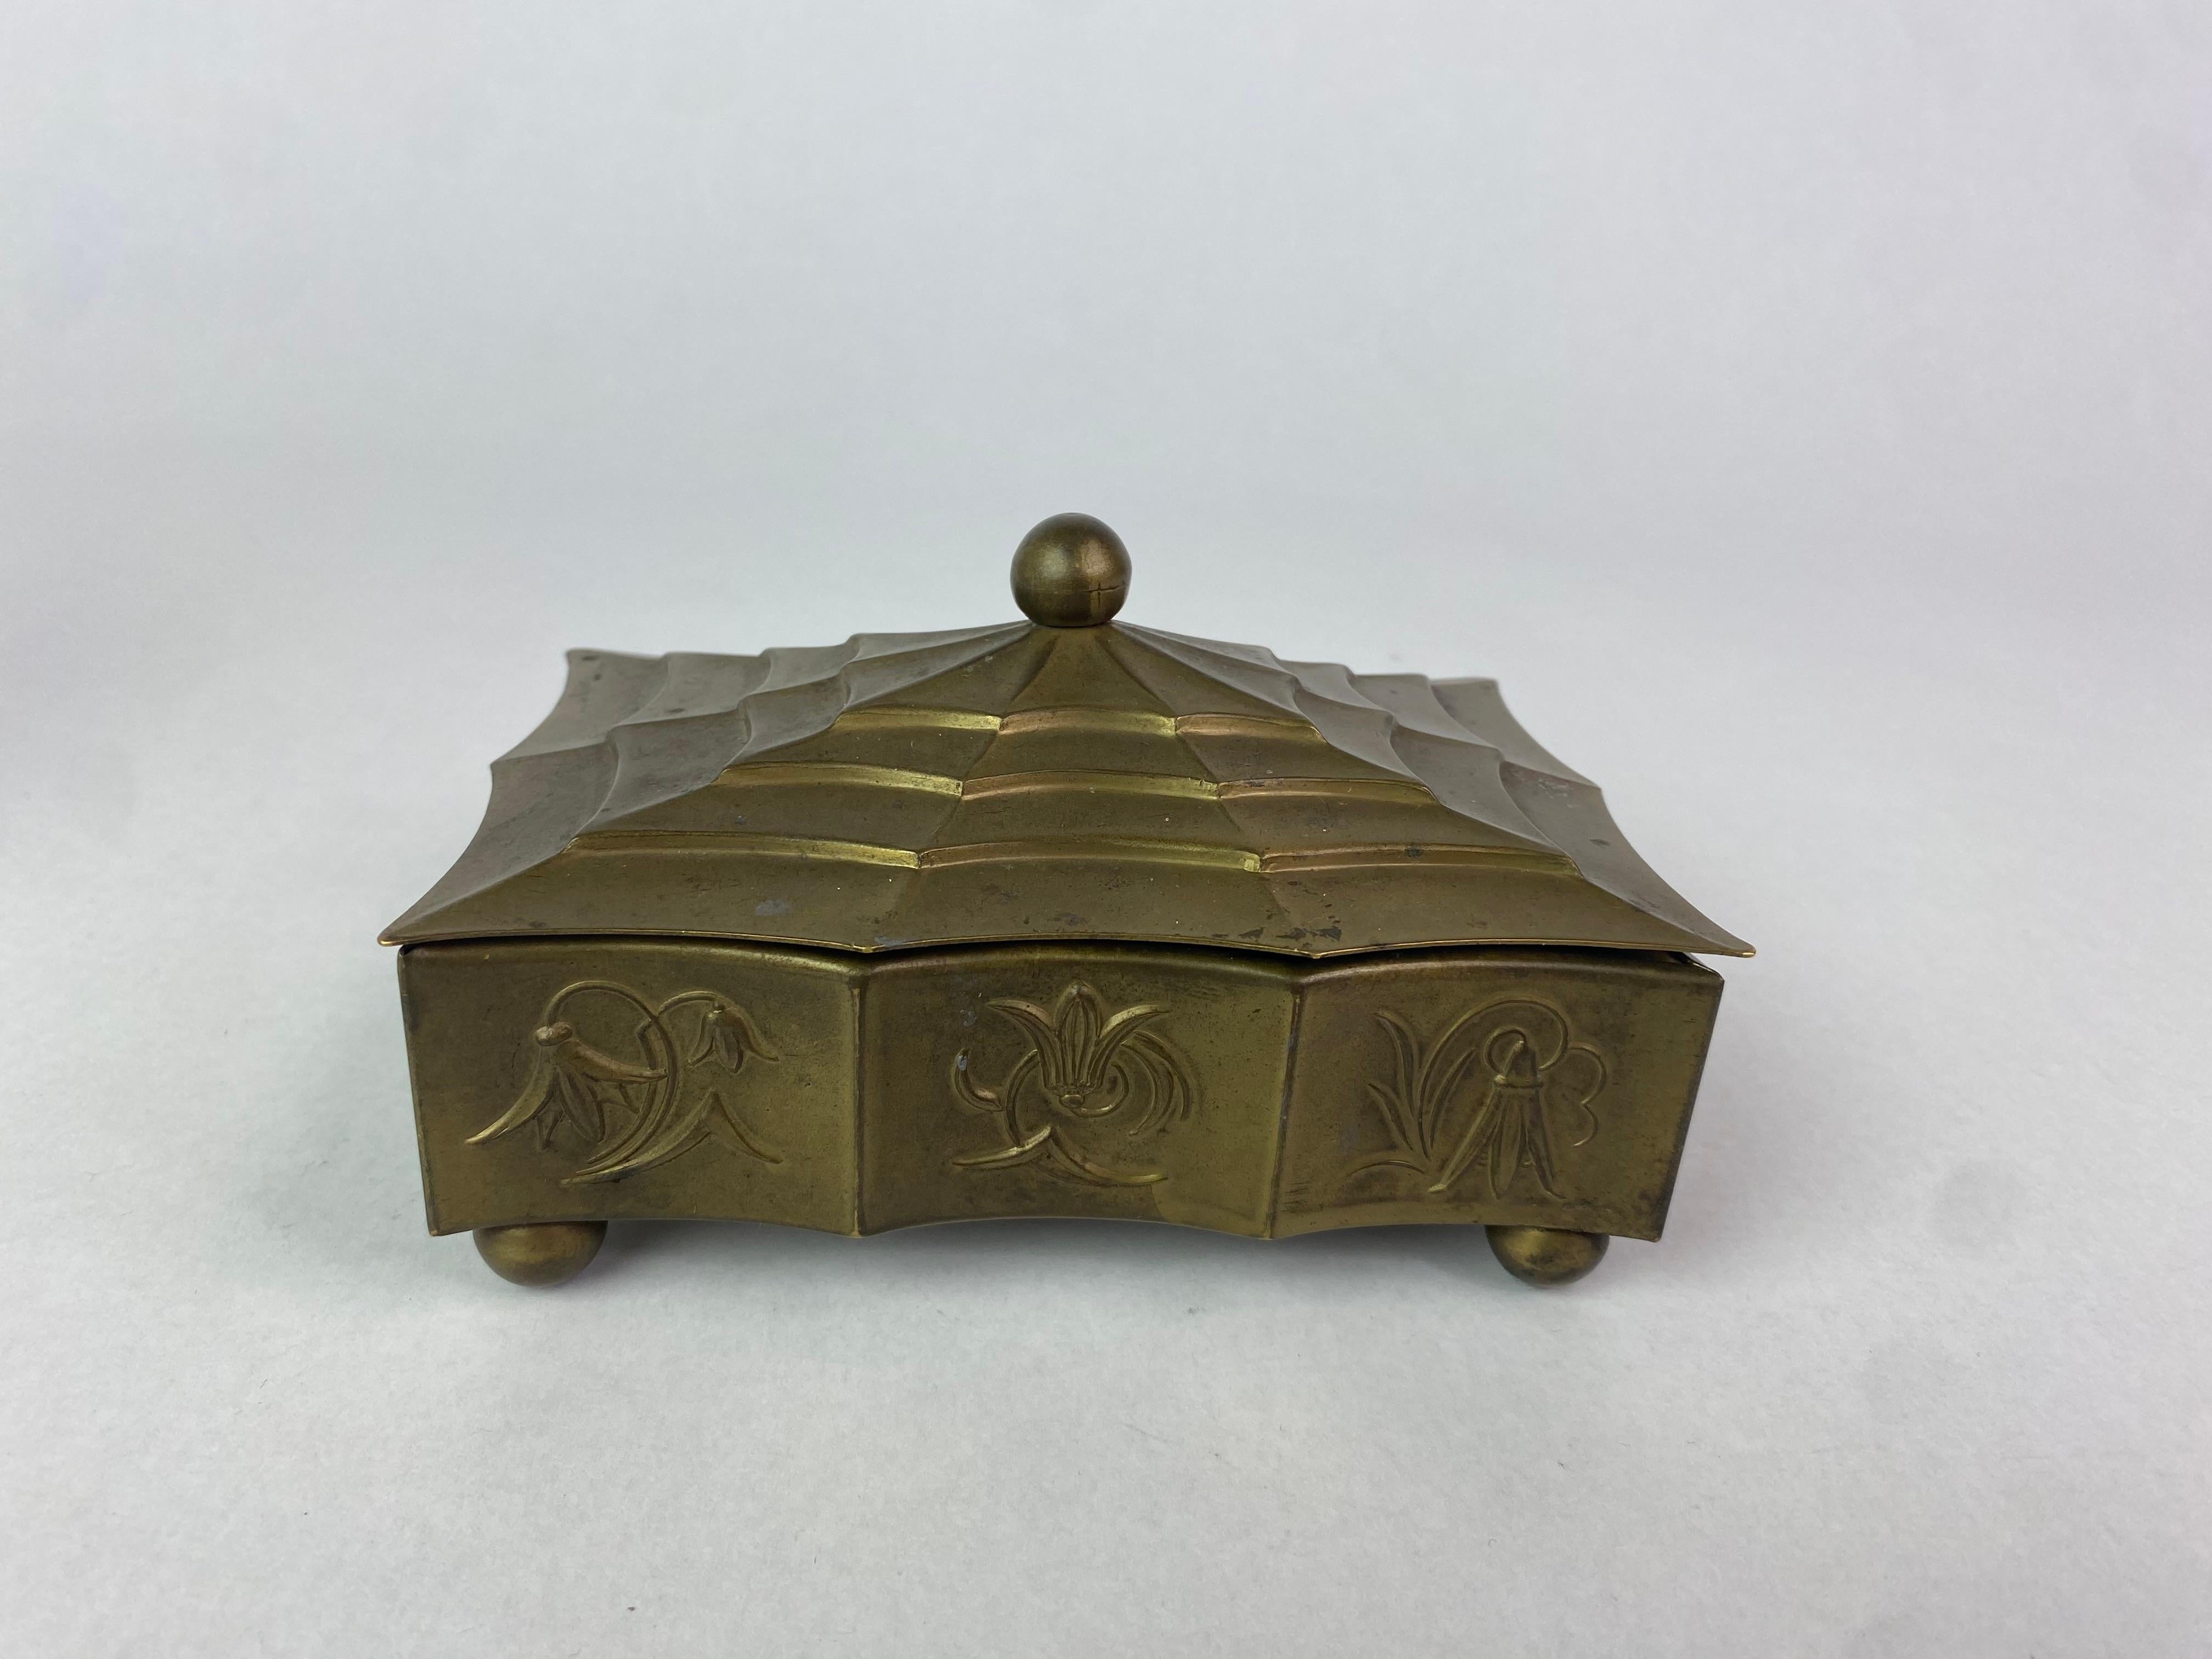 Brass jewelry box in style of Dagobert Peche and Wiener Werkstätte.